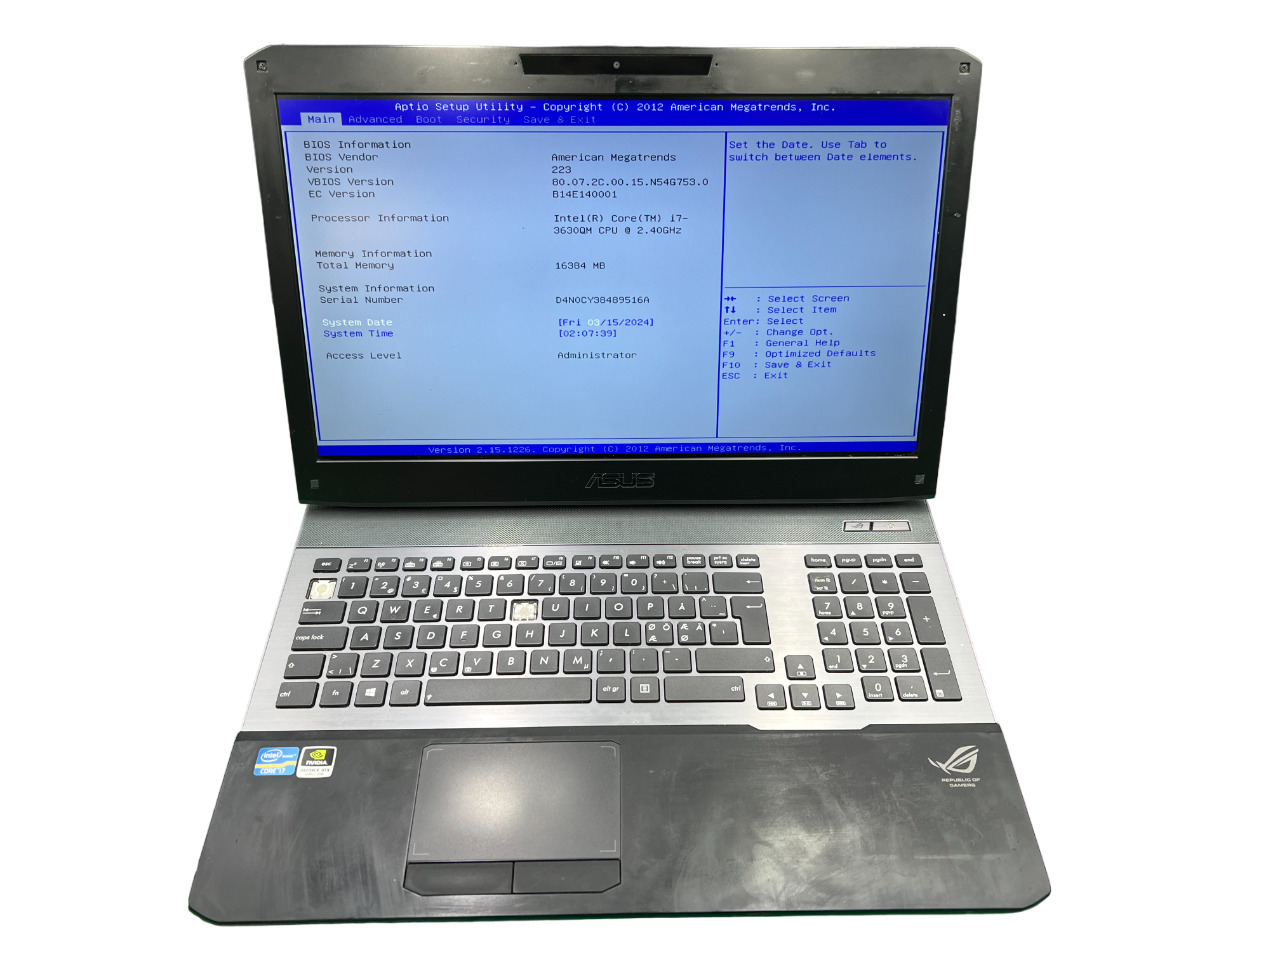 ASUS ROG G75VW Gaming Laptop (i7-3630QM, 16GB RAM, 256 SSD, GTX 660M) Read Desc